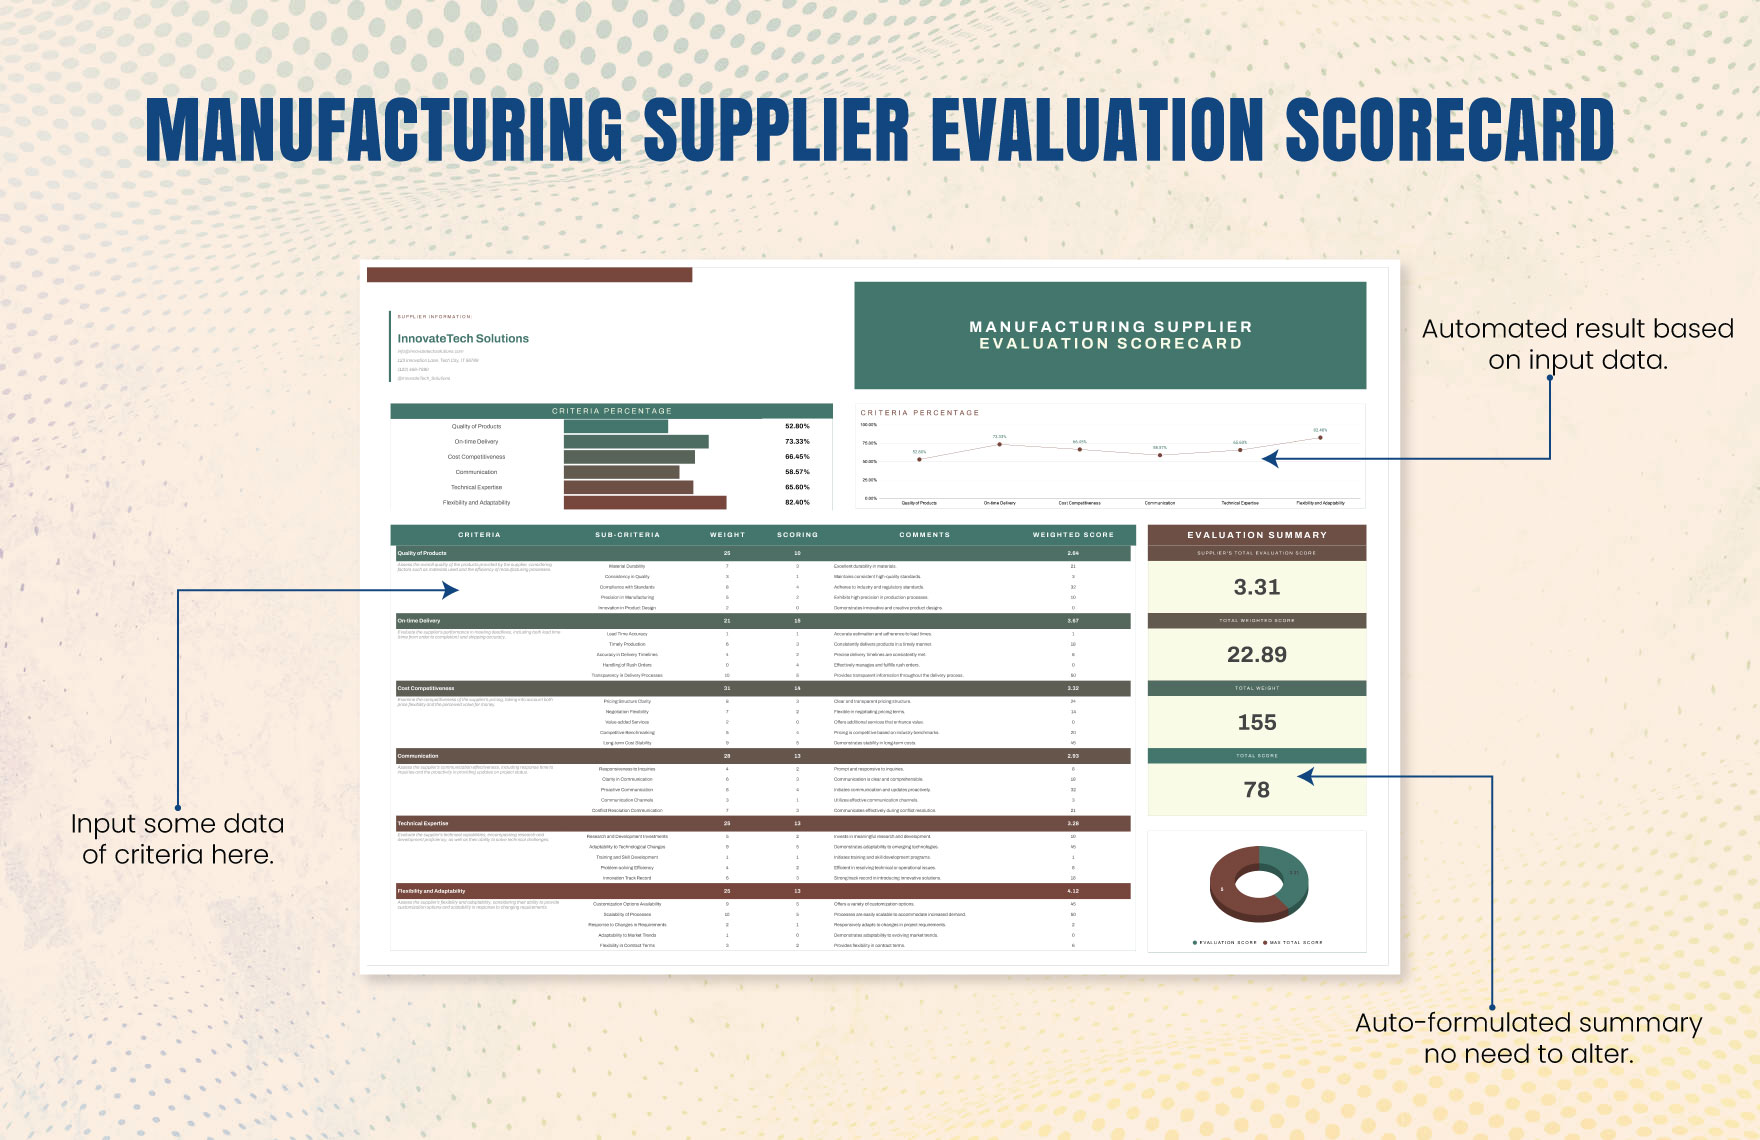 Manufacturing Supplier Evaluation Scorecard Template